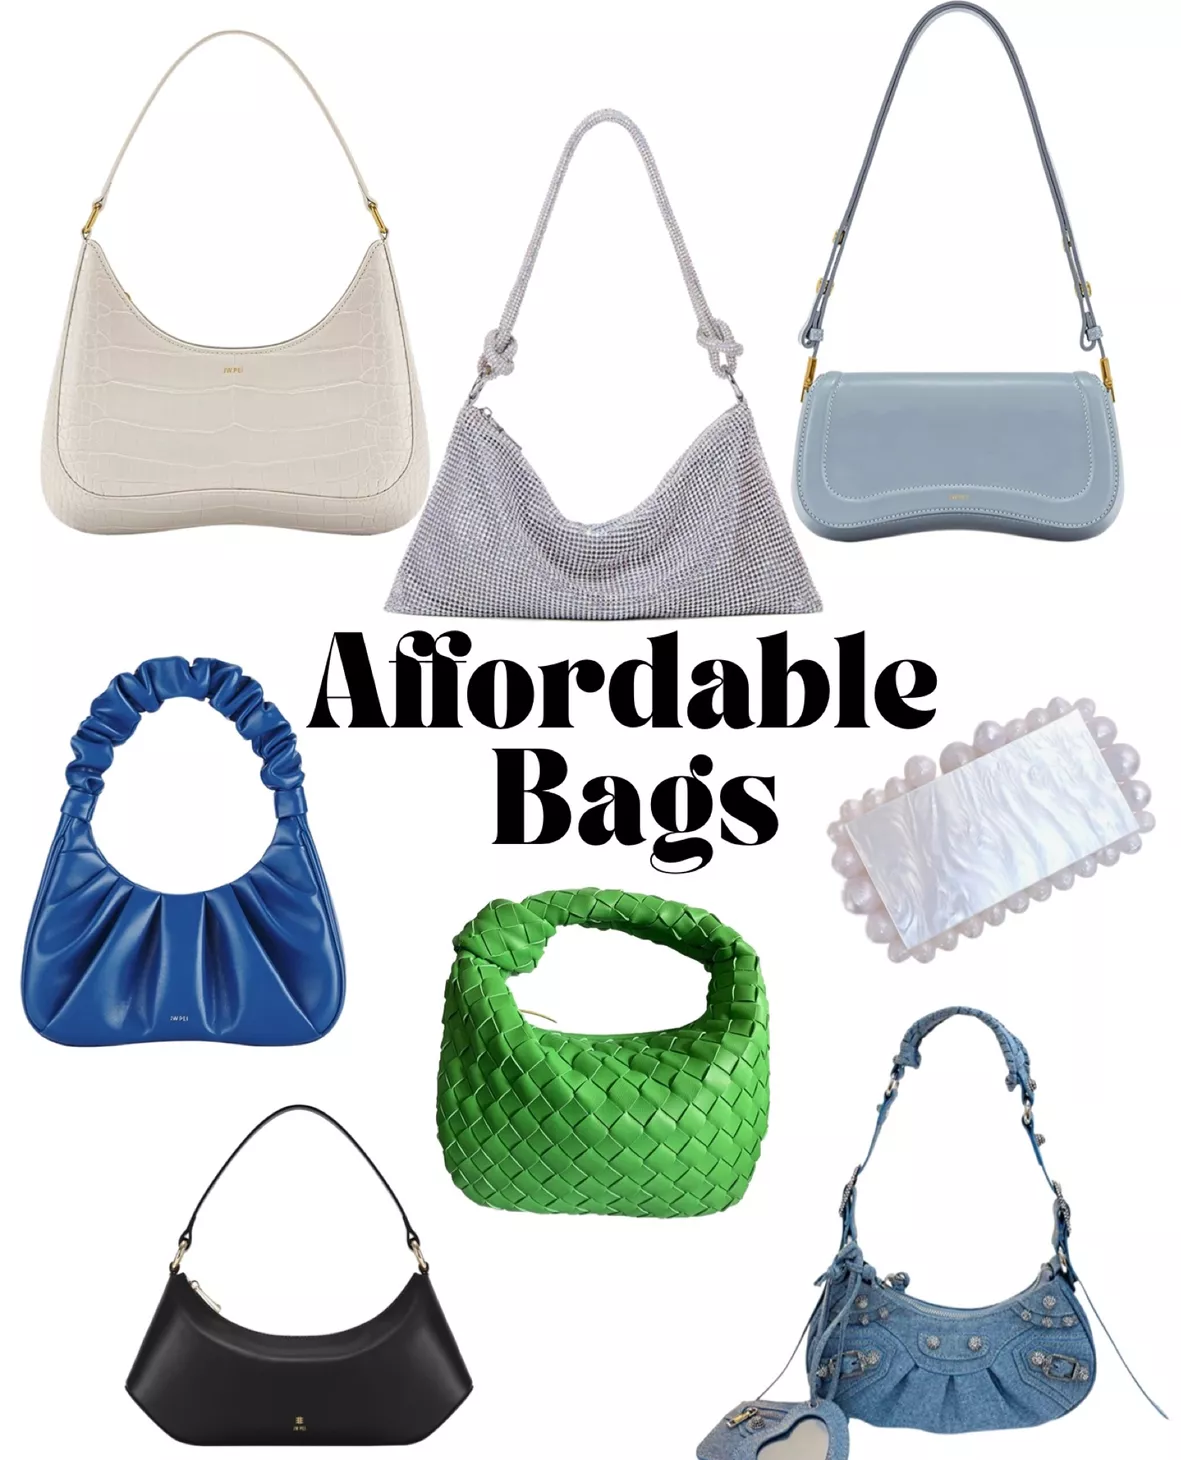 Affordable designer/Luxury bags